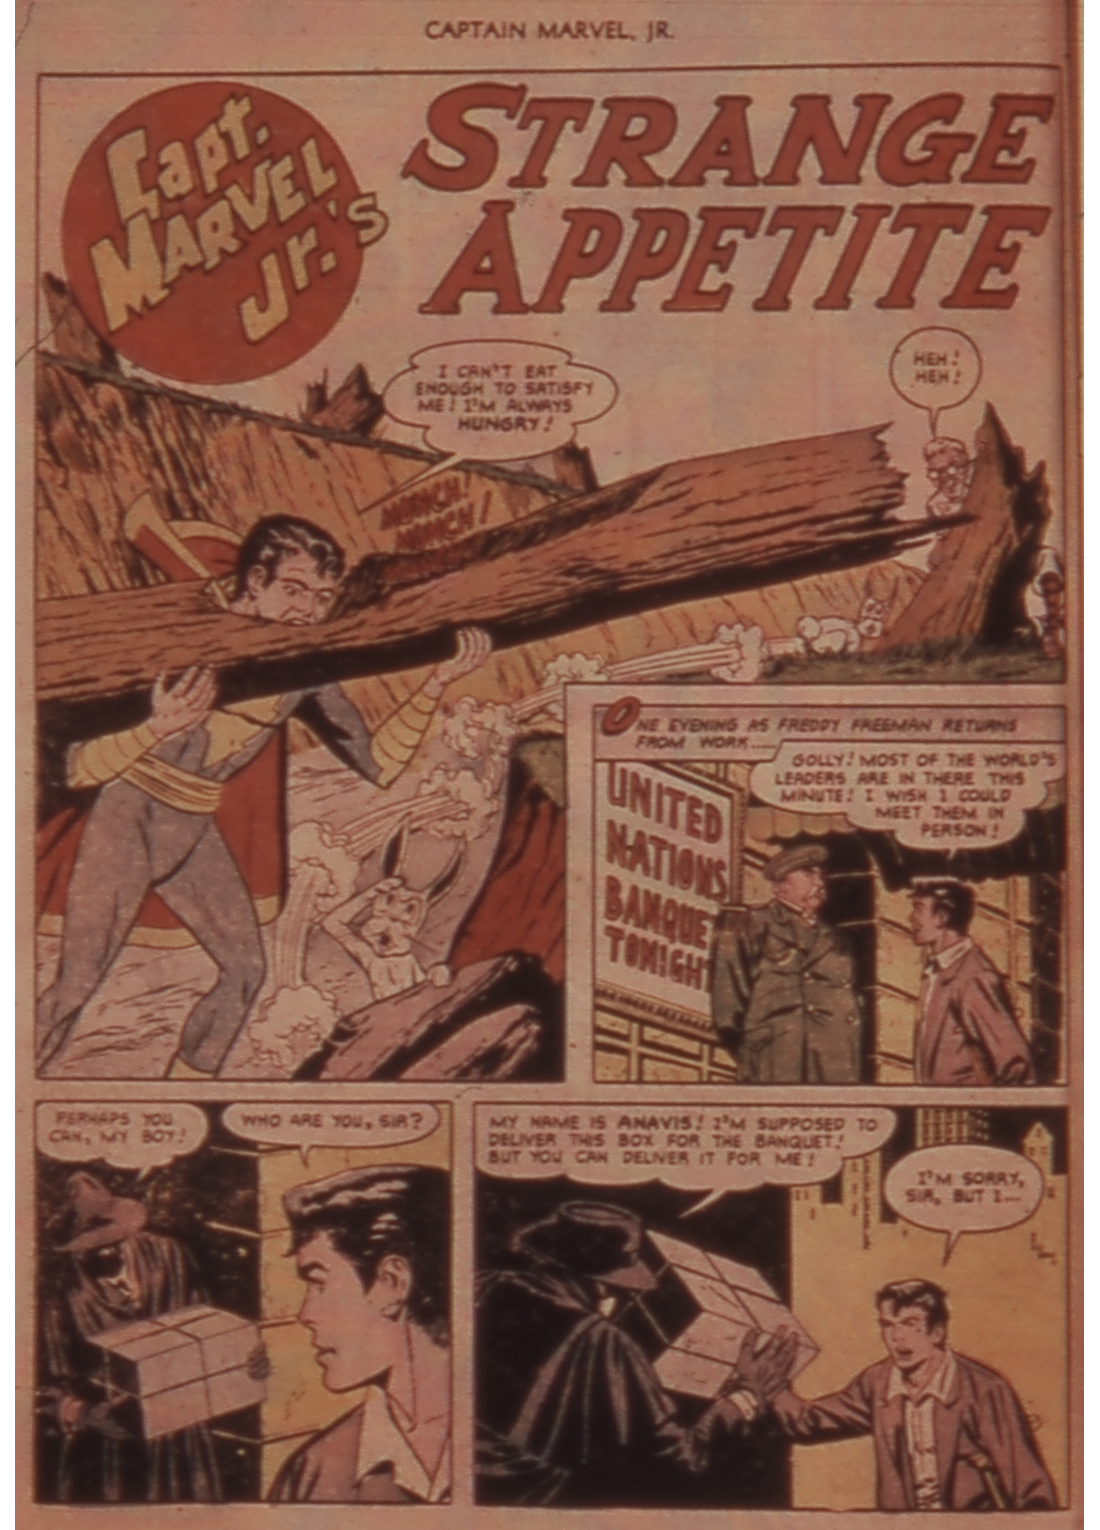 Read online Captain Marvel, Jr. comic -  Issue #98 - 20